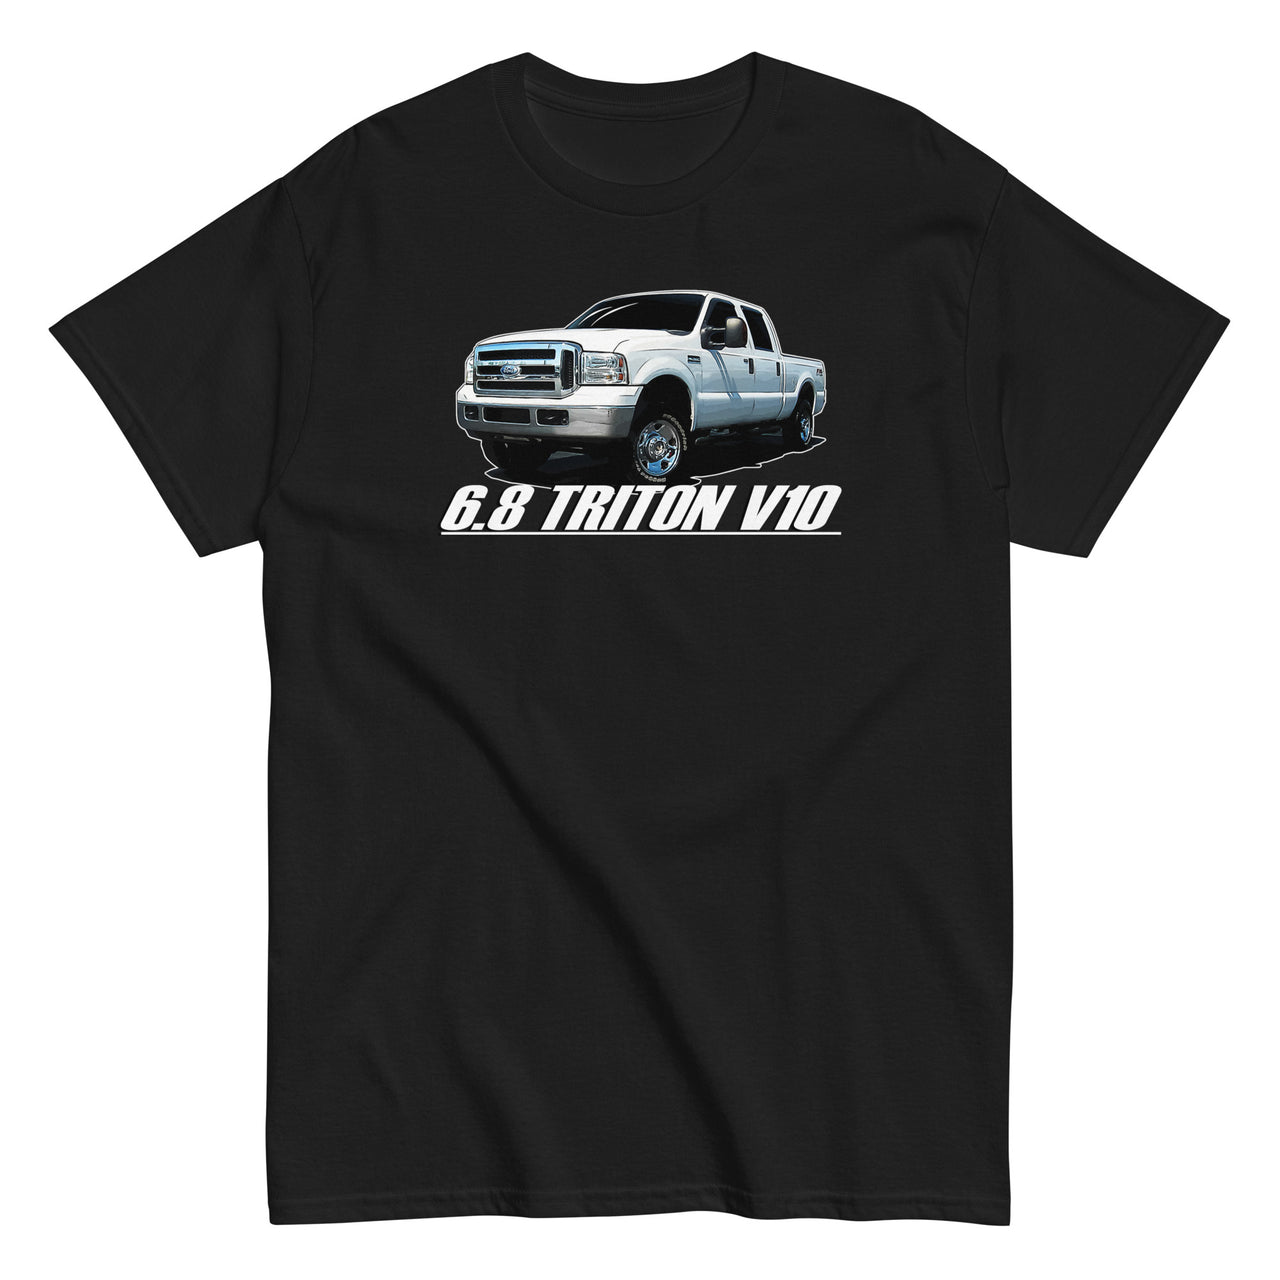 6.8 Triton V10 F250 Crew Cab T-Shirt in black